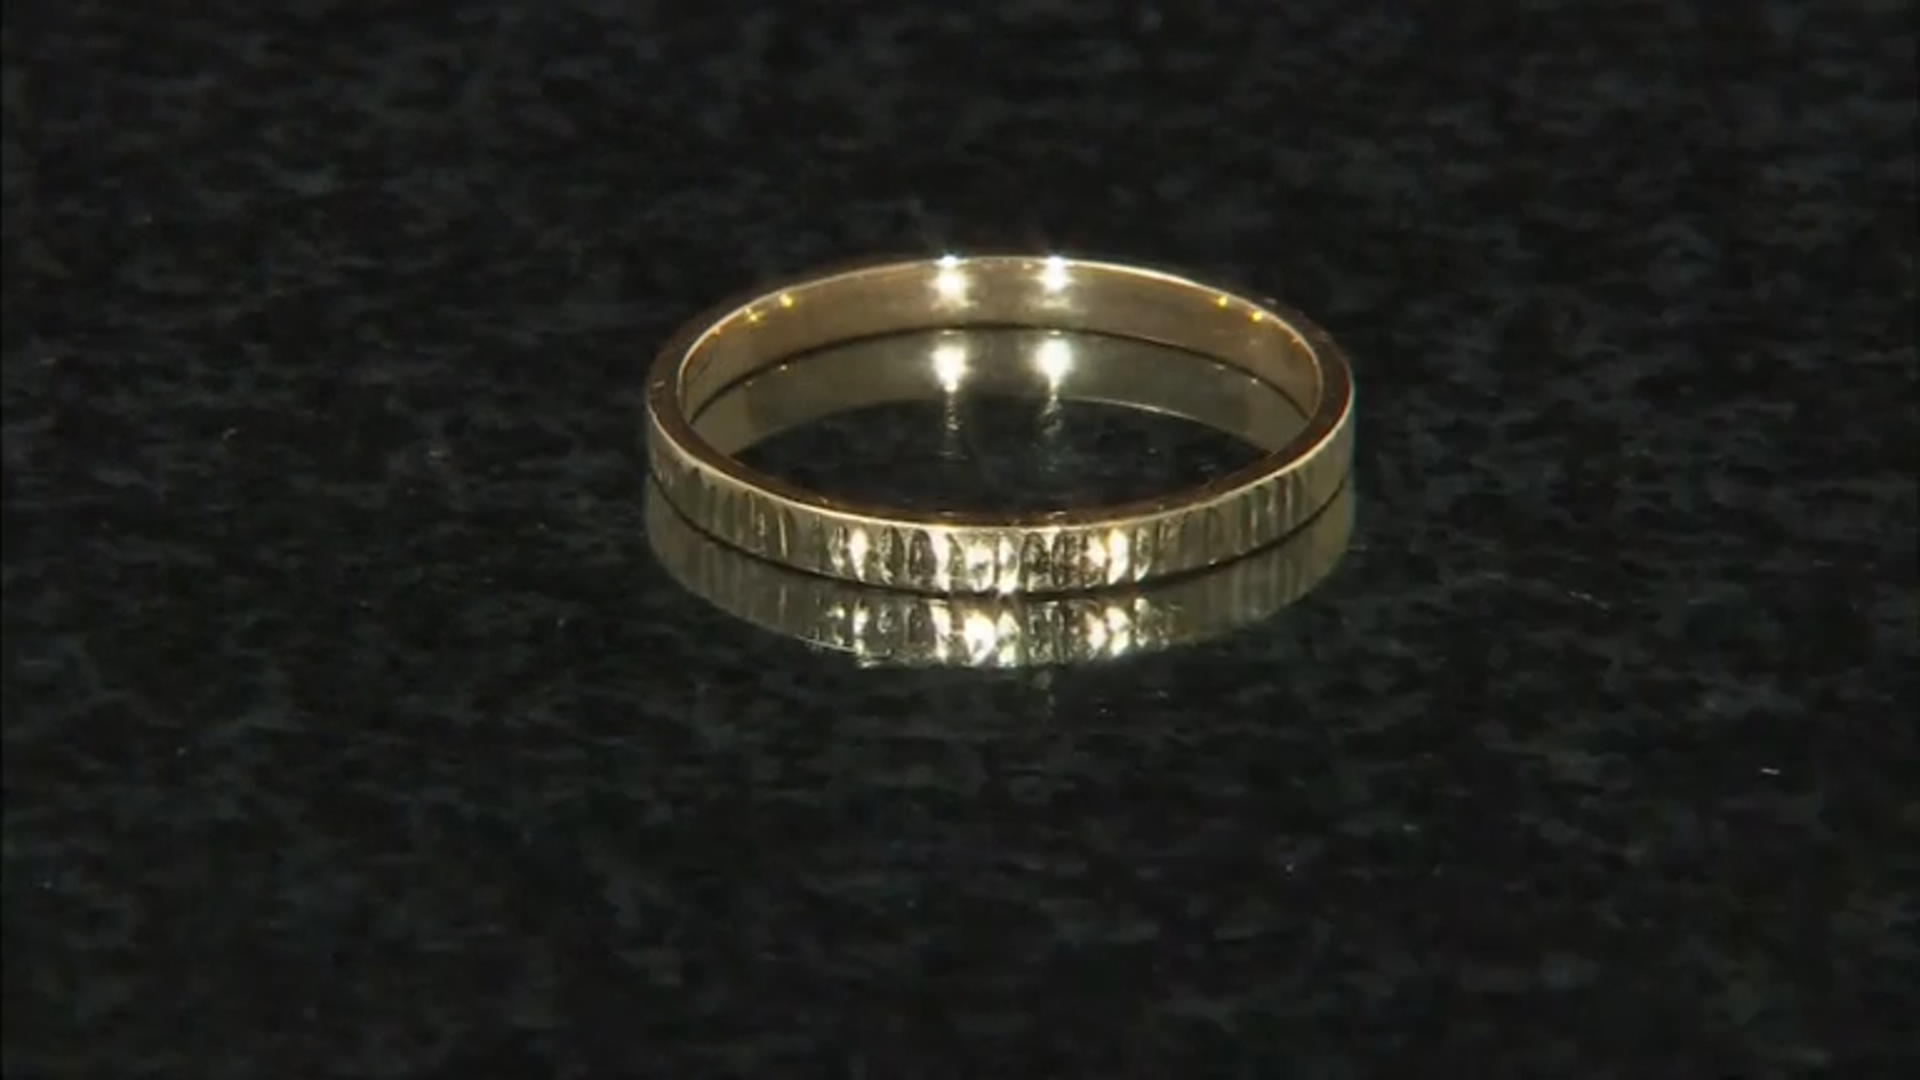 10K Yellow Gold 2mm Textured Band Ring Video Thumbnail